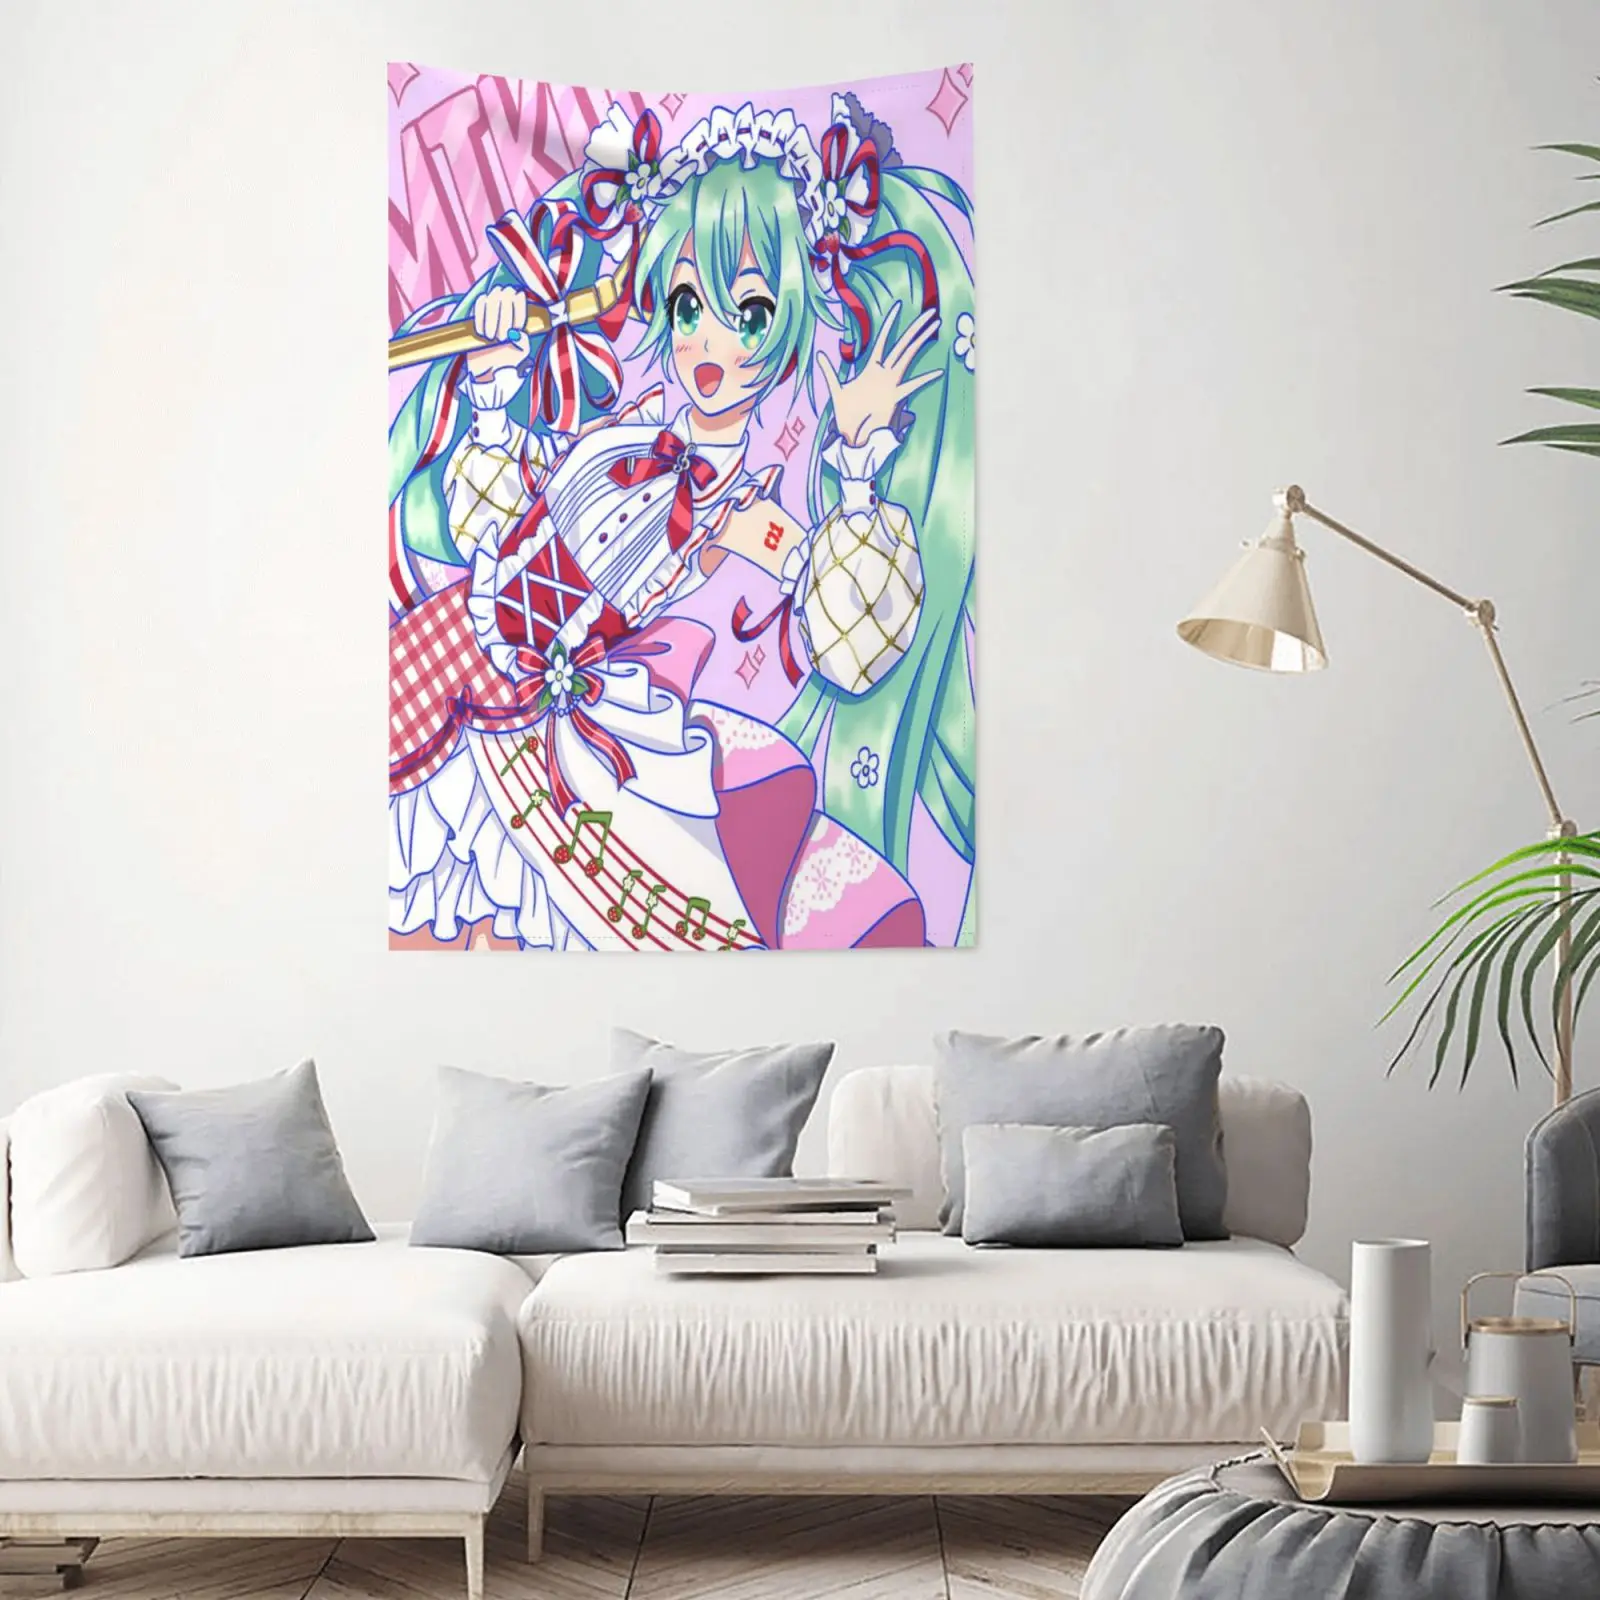 Technoblade Never Dies Merch Technobladeee Never Dies Merch Japanese Anime  Manga Poster Art Prints Home Decor Gift Posters : : Home